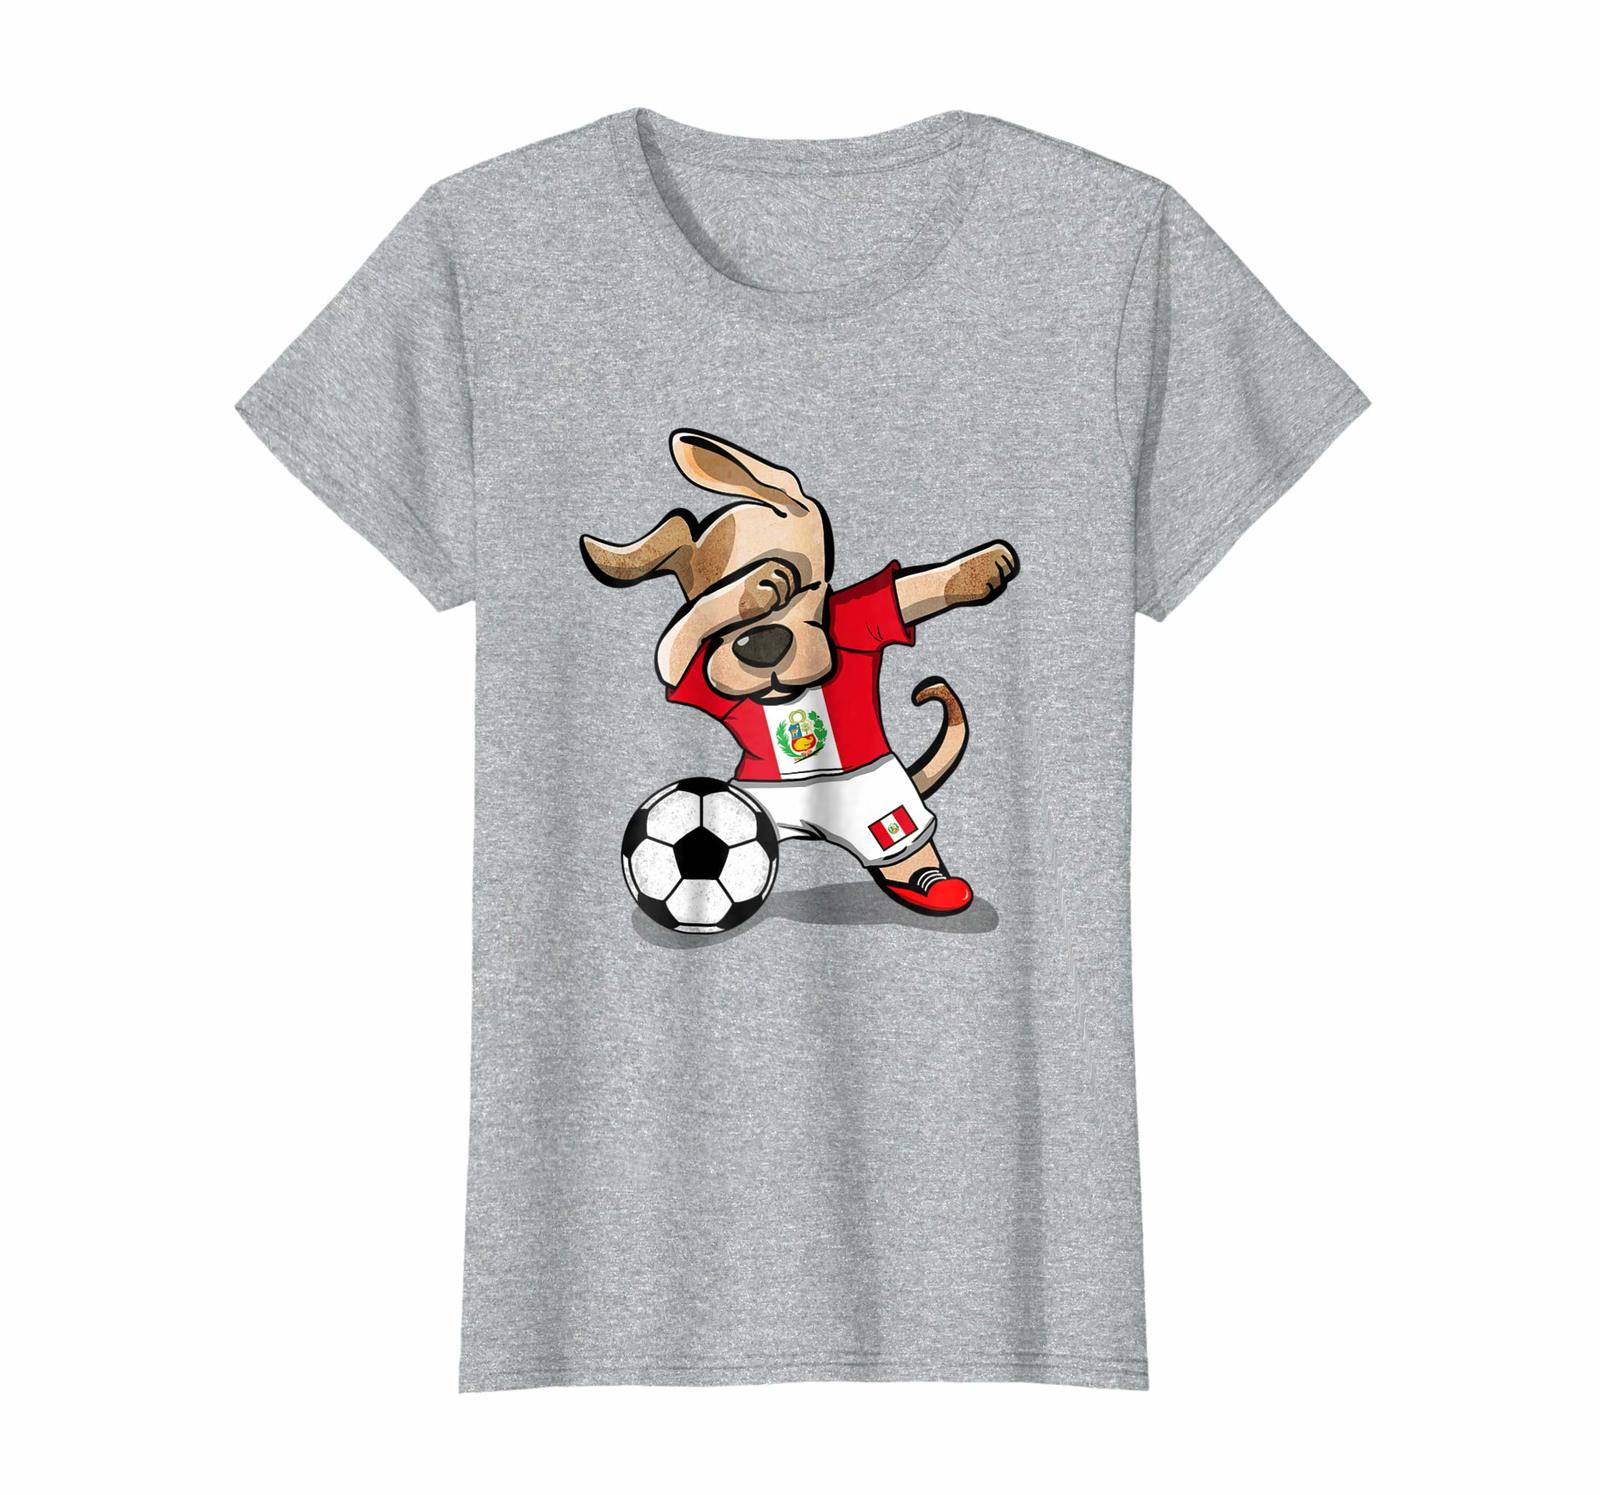 Dog Fashion - Dog Dabbing Soccer Peru Jersey Shirt Peruvian Football 2018 Wowen